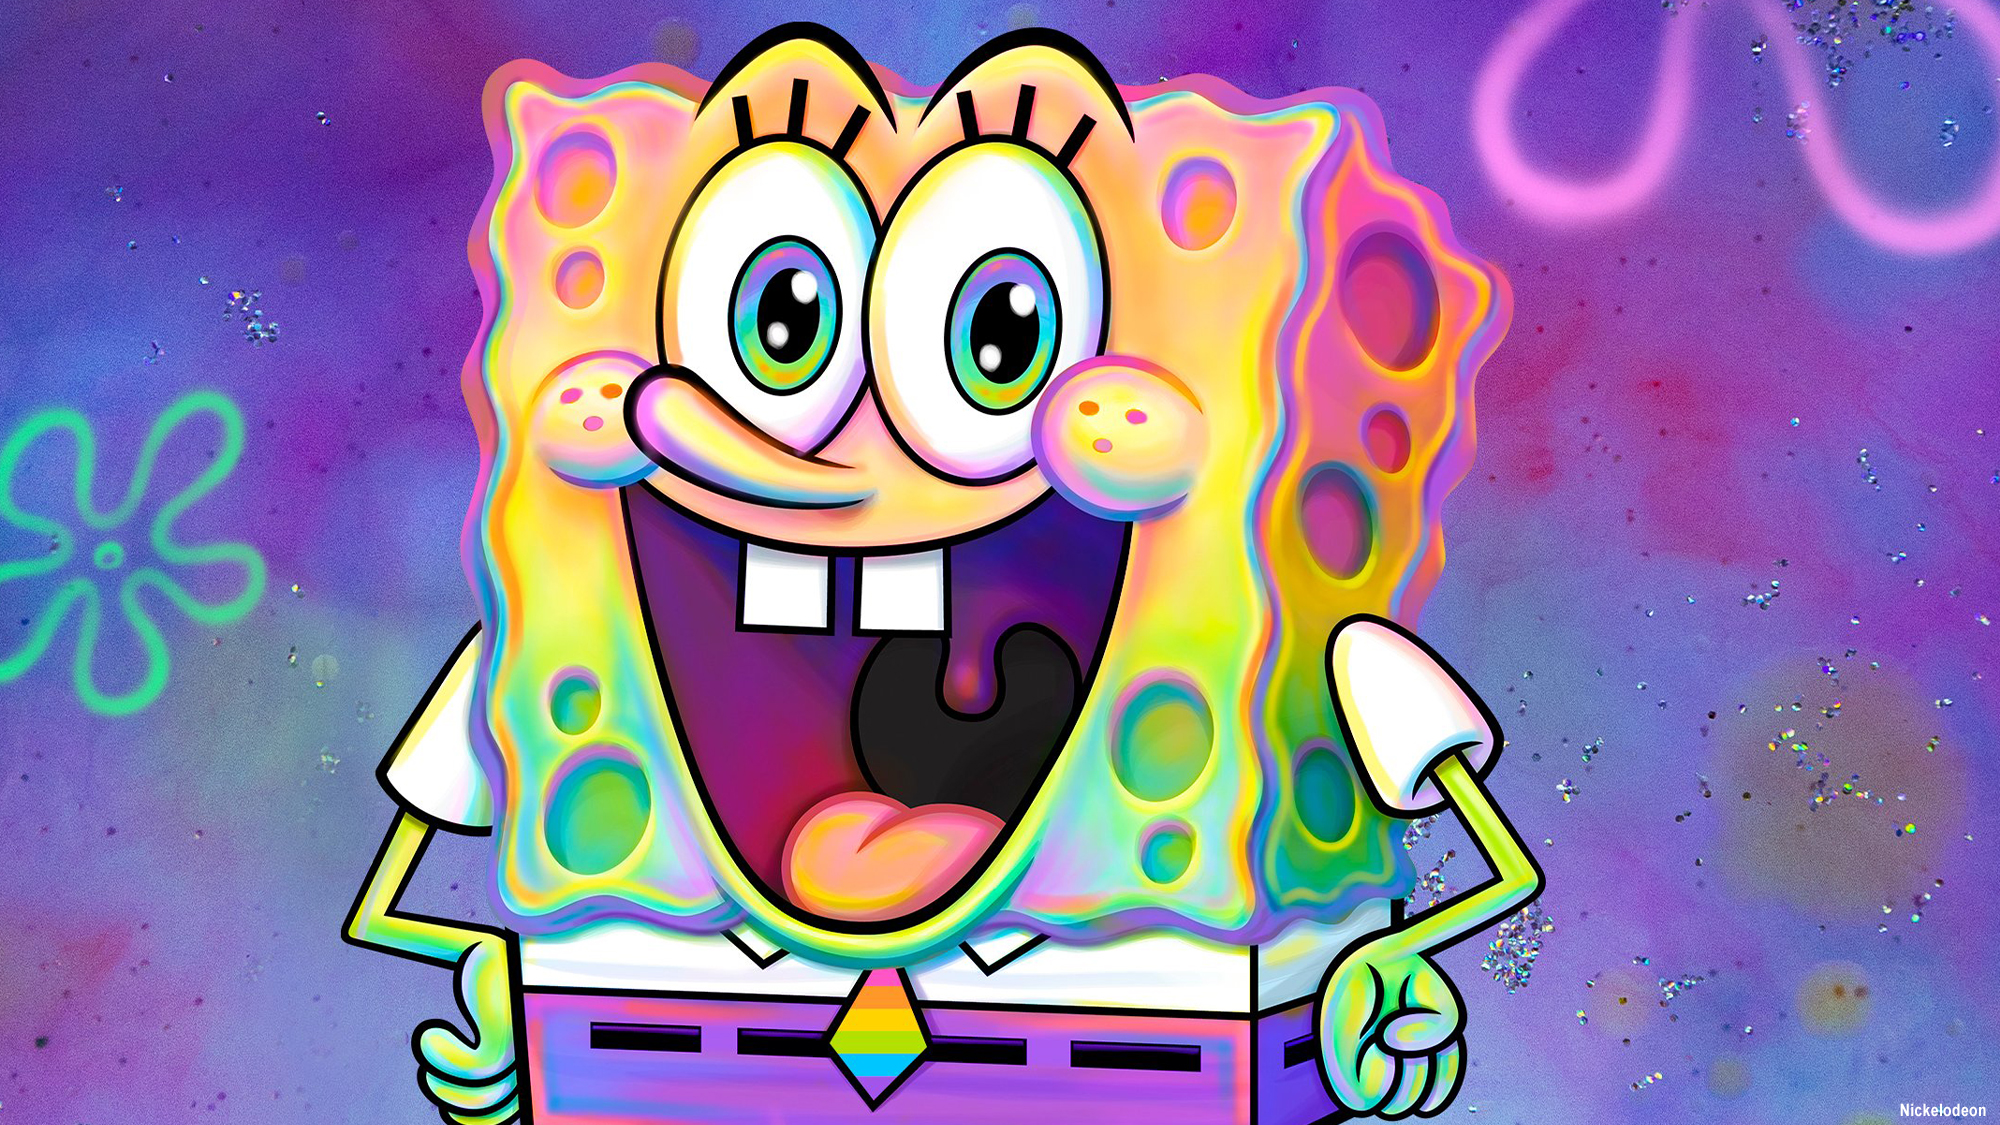 Nickelodeon Cartoon Gay Porn - Spongebob Just Came Out Of The Closet... Again? - TheSword.com